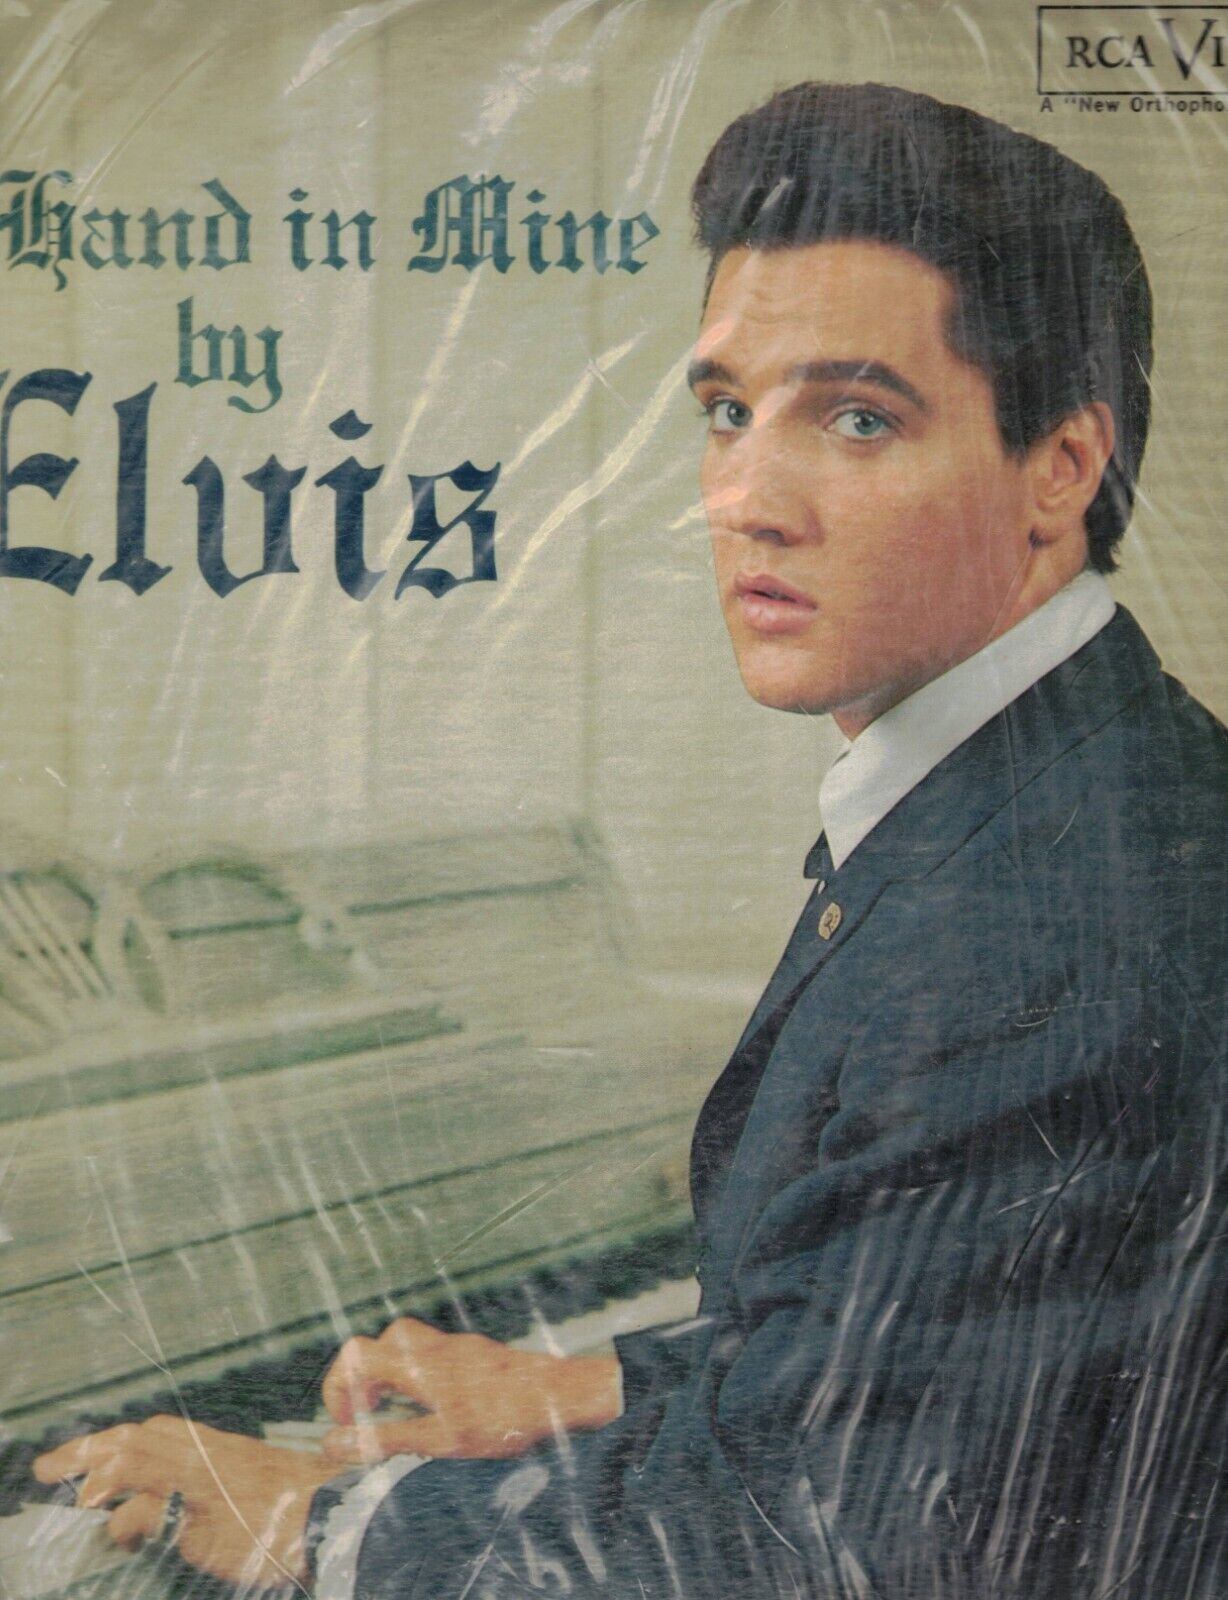 ELVIS PRESLEY HIS HAND IN MINE LP RCA LPM-2328 1960 GOOD LONG PLAY